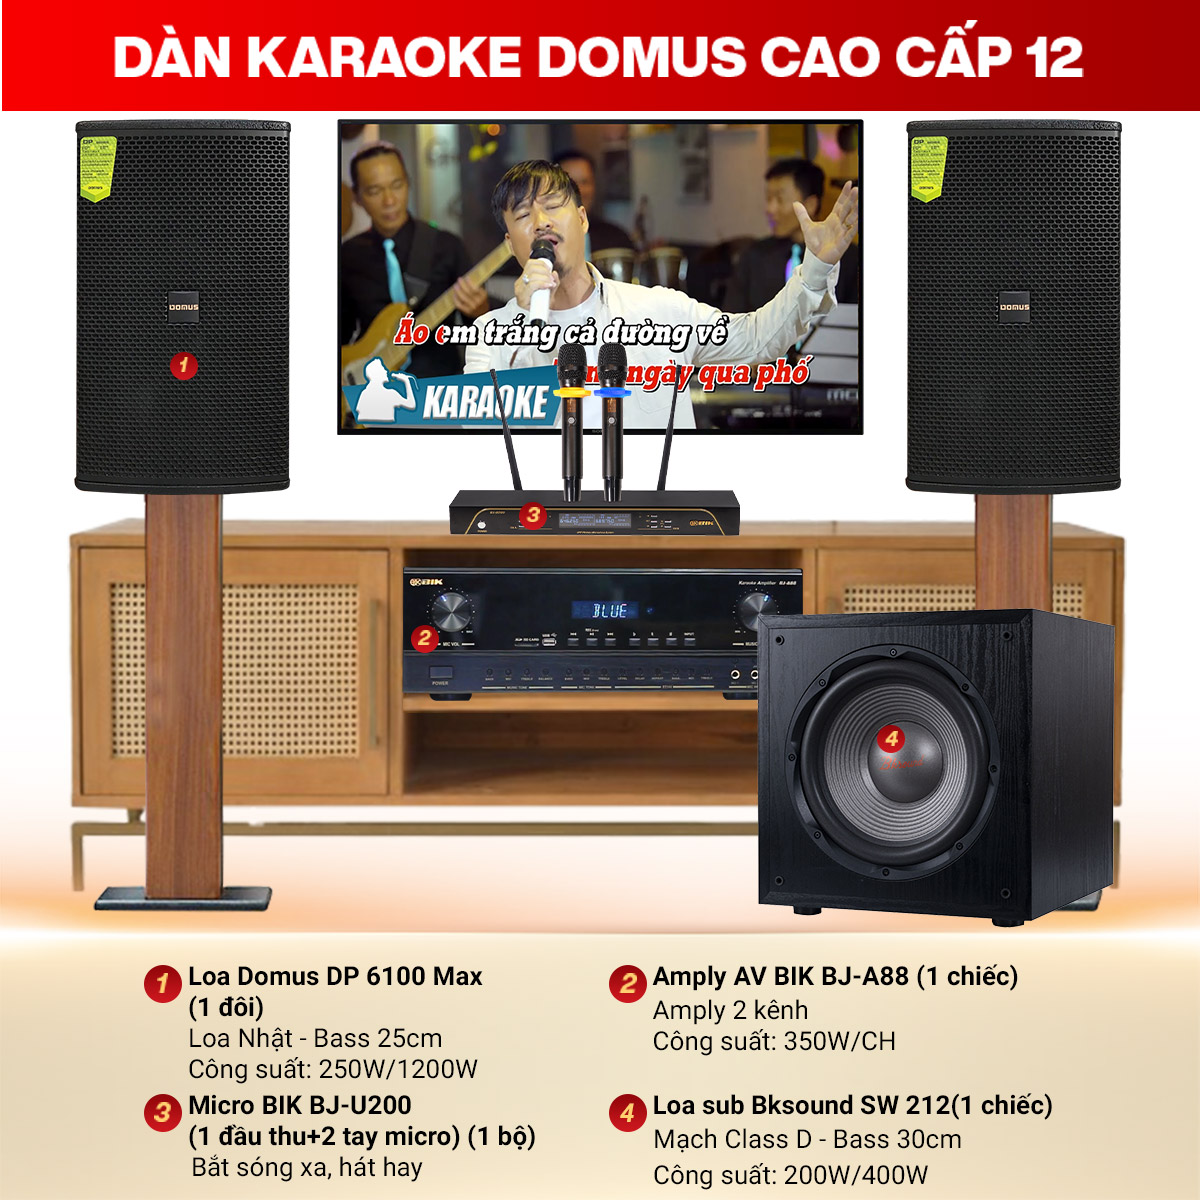 Dàn karaoke cao cấp Domus 12